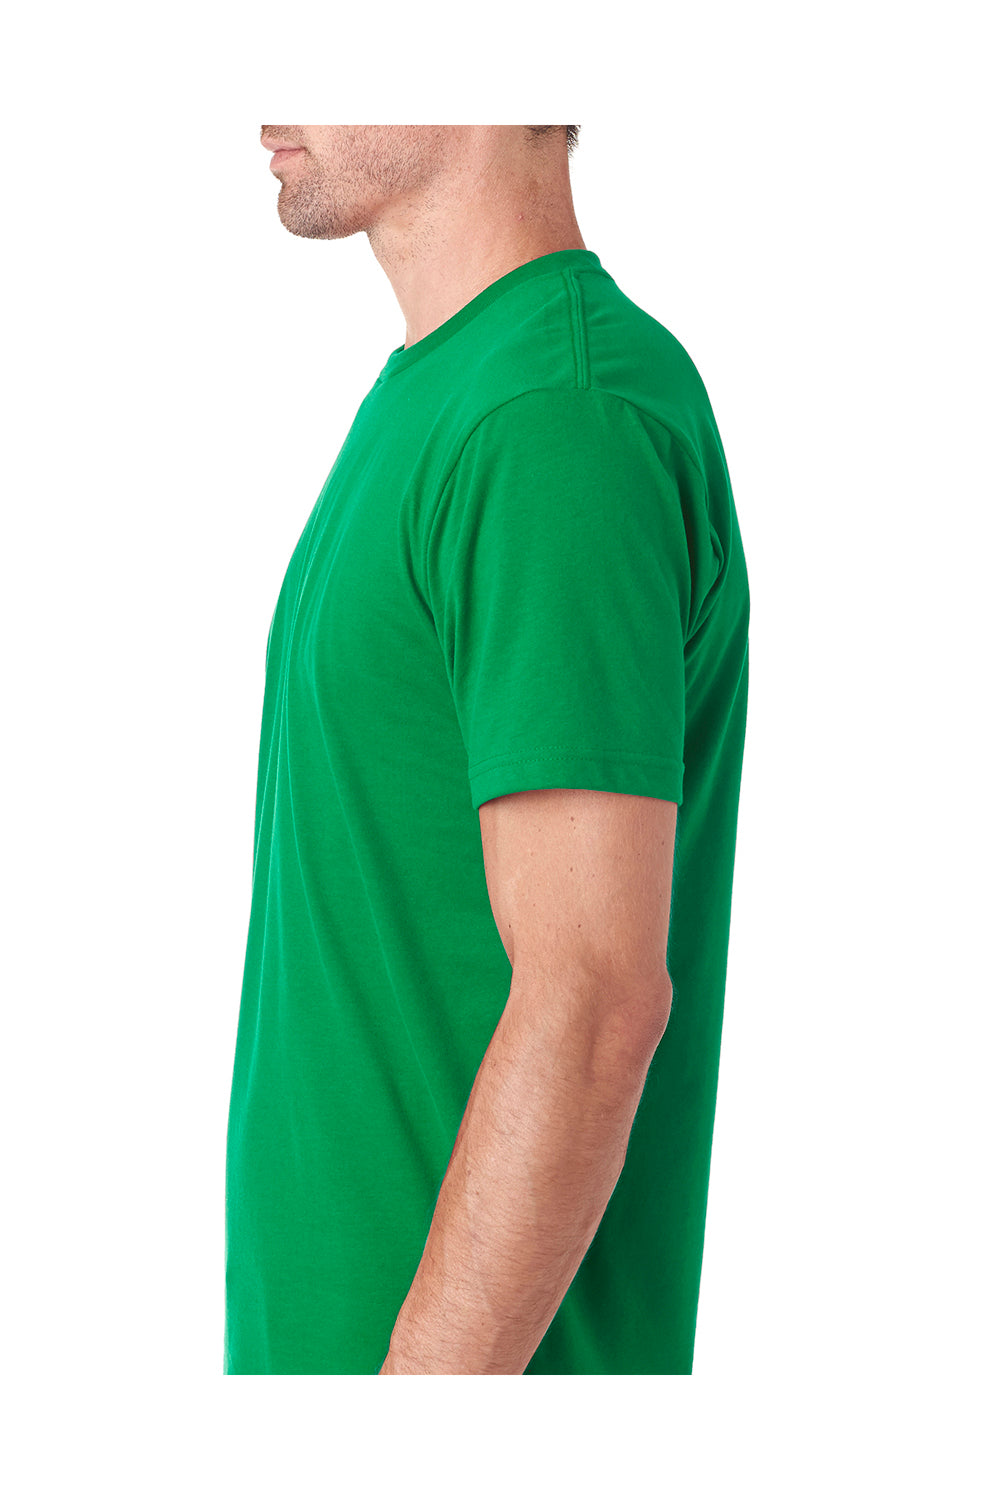 Next Level 6410 Mens Sueded Jersey Short Sleeve Crewneck T-Shirt Envy Green Side